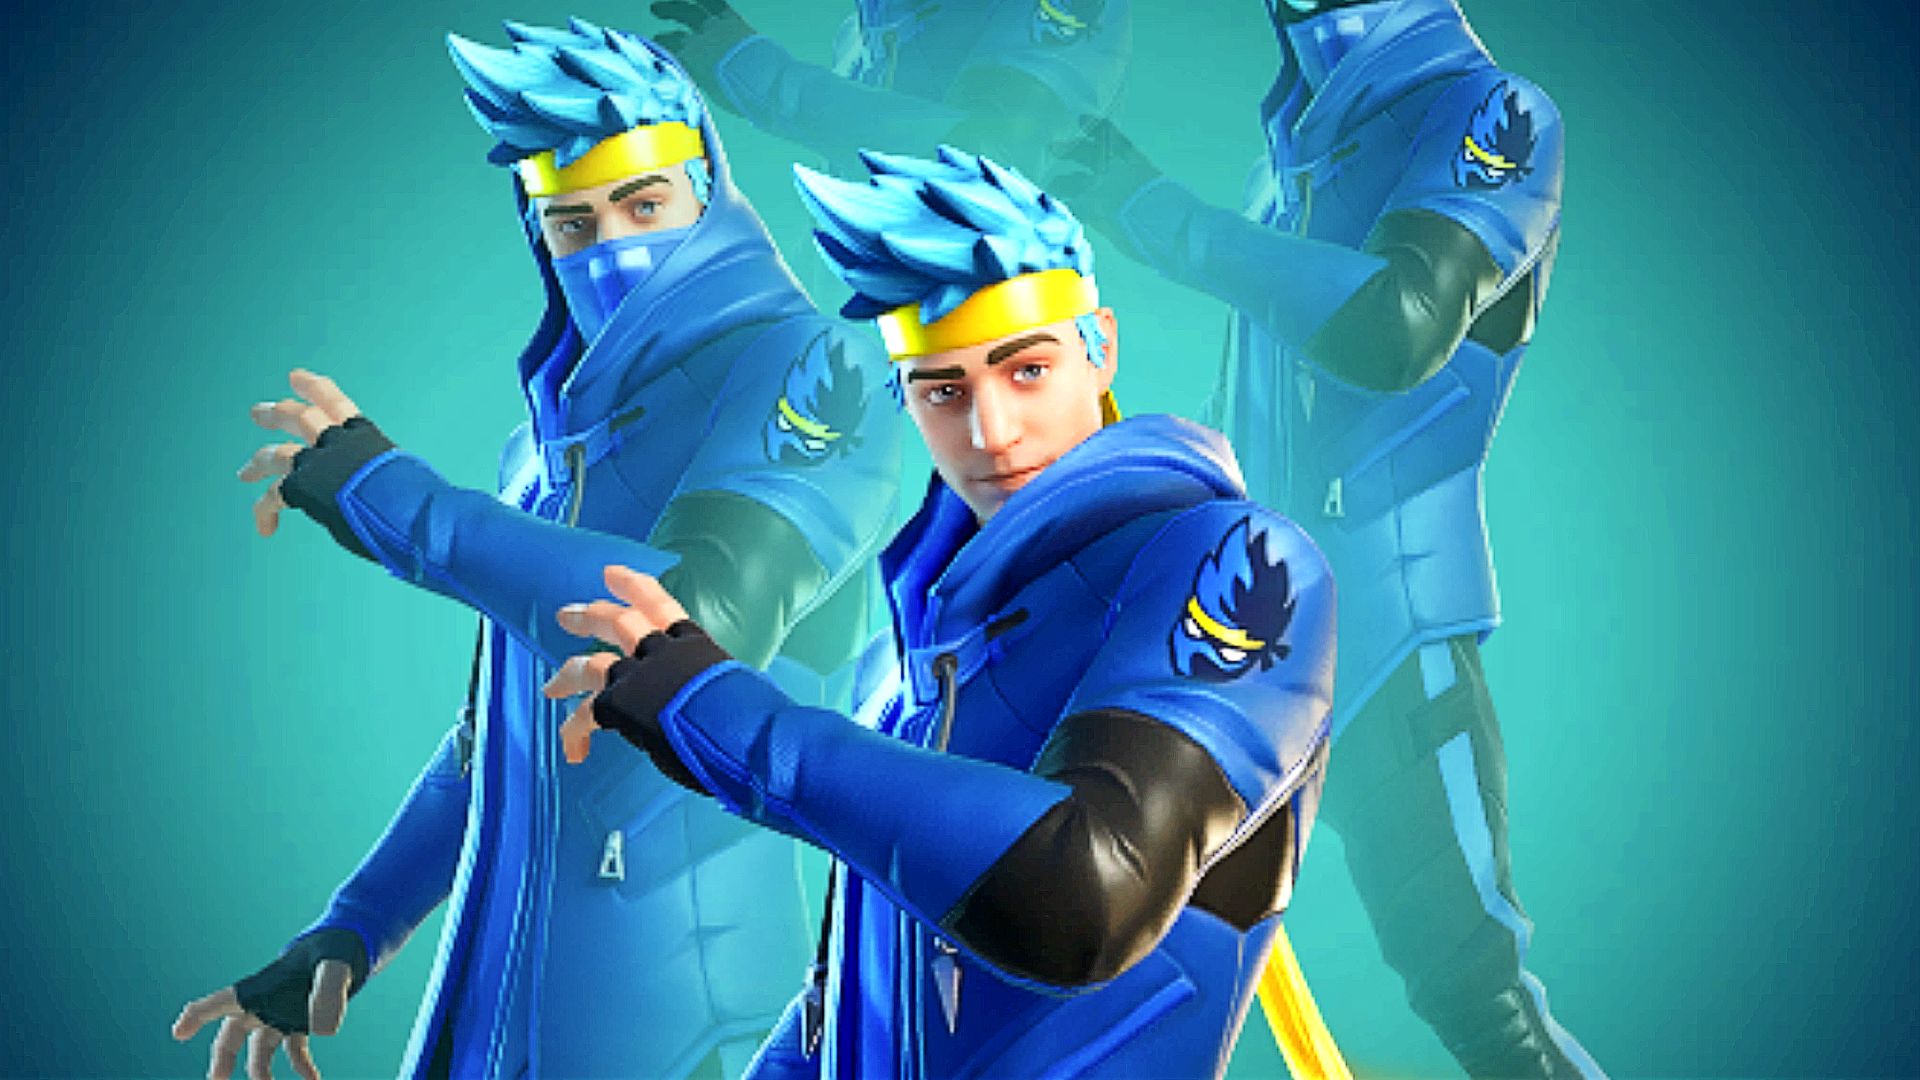 Fortnite's getting celebrity skins, starting with Ninja - Polygon